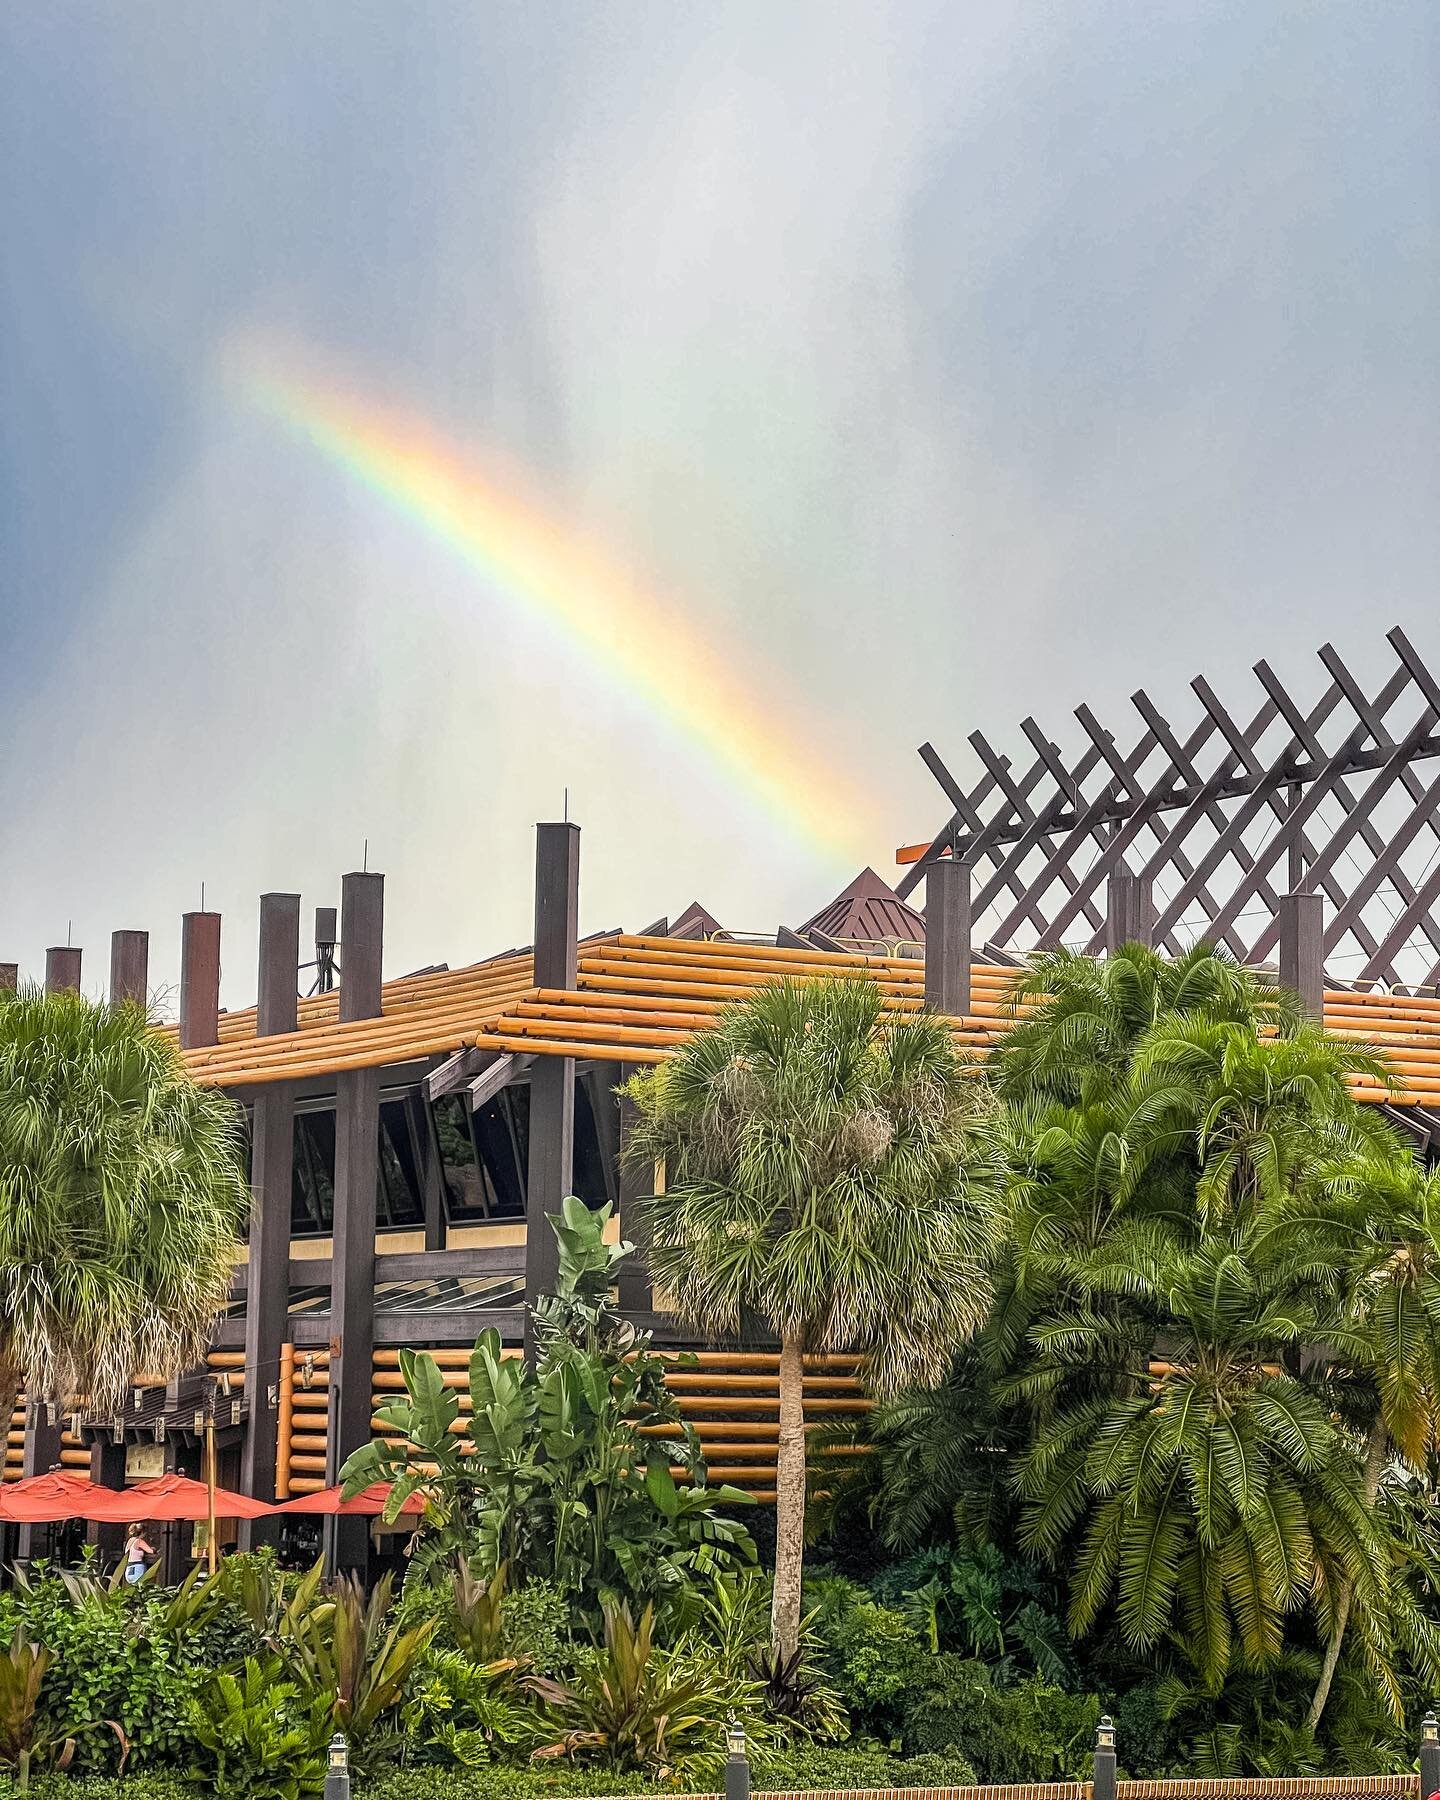 Rainbow at the Poly tonight😍

#waltdisneyworld #polynesian #orlando